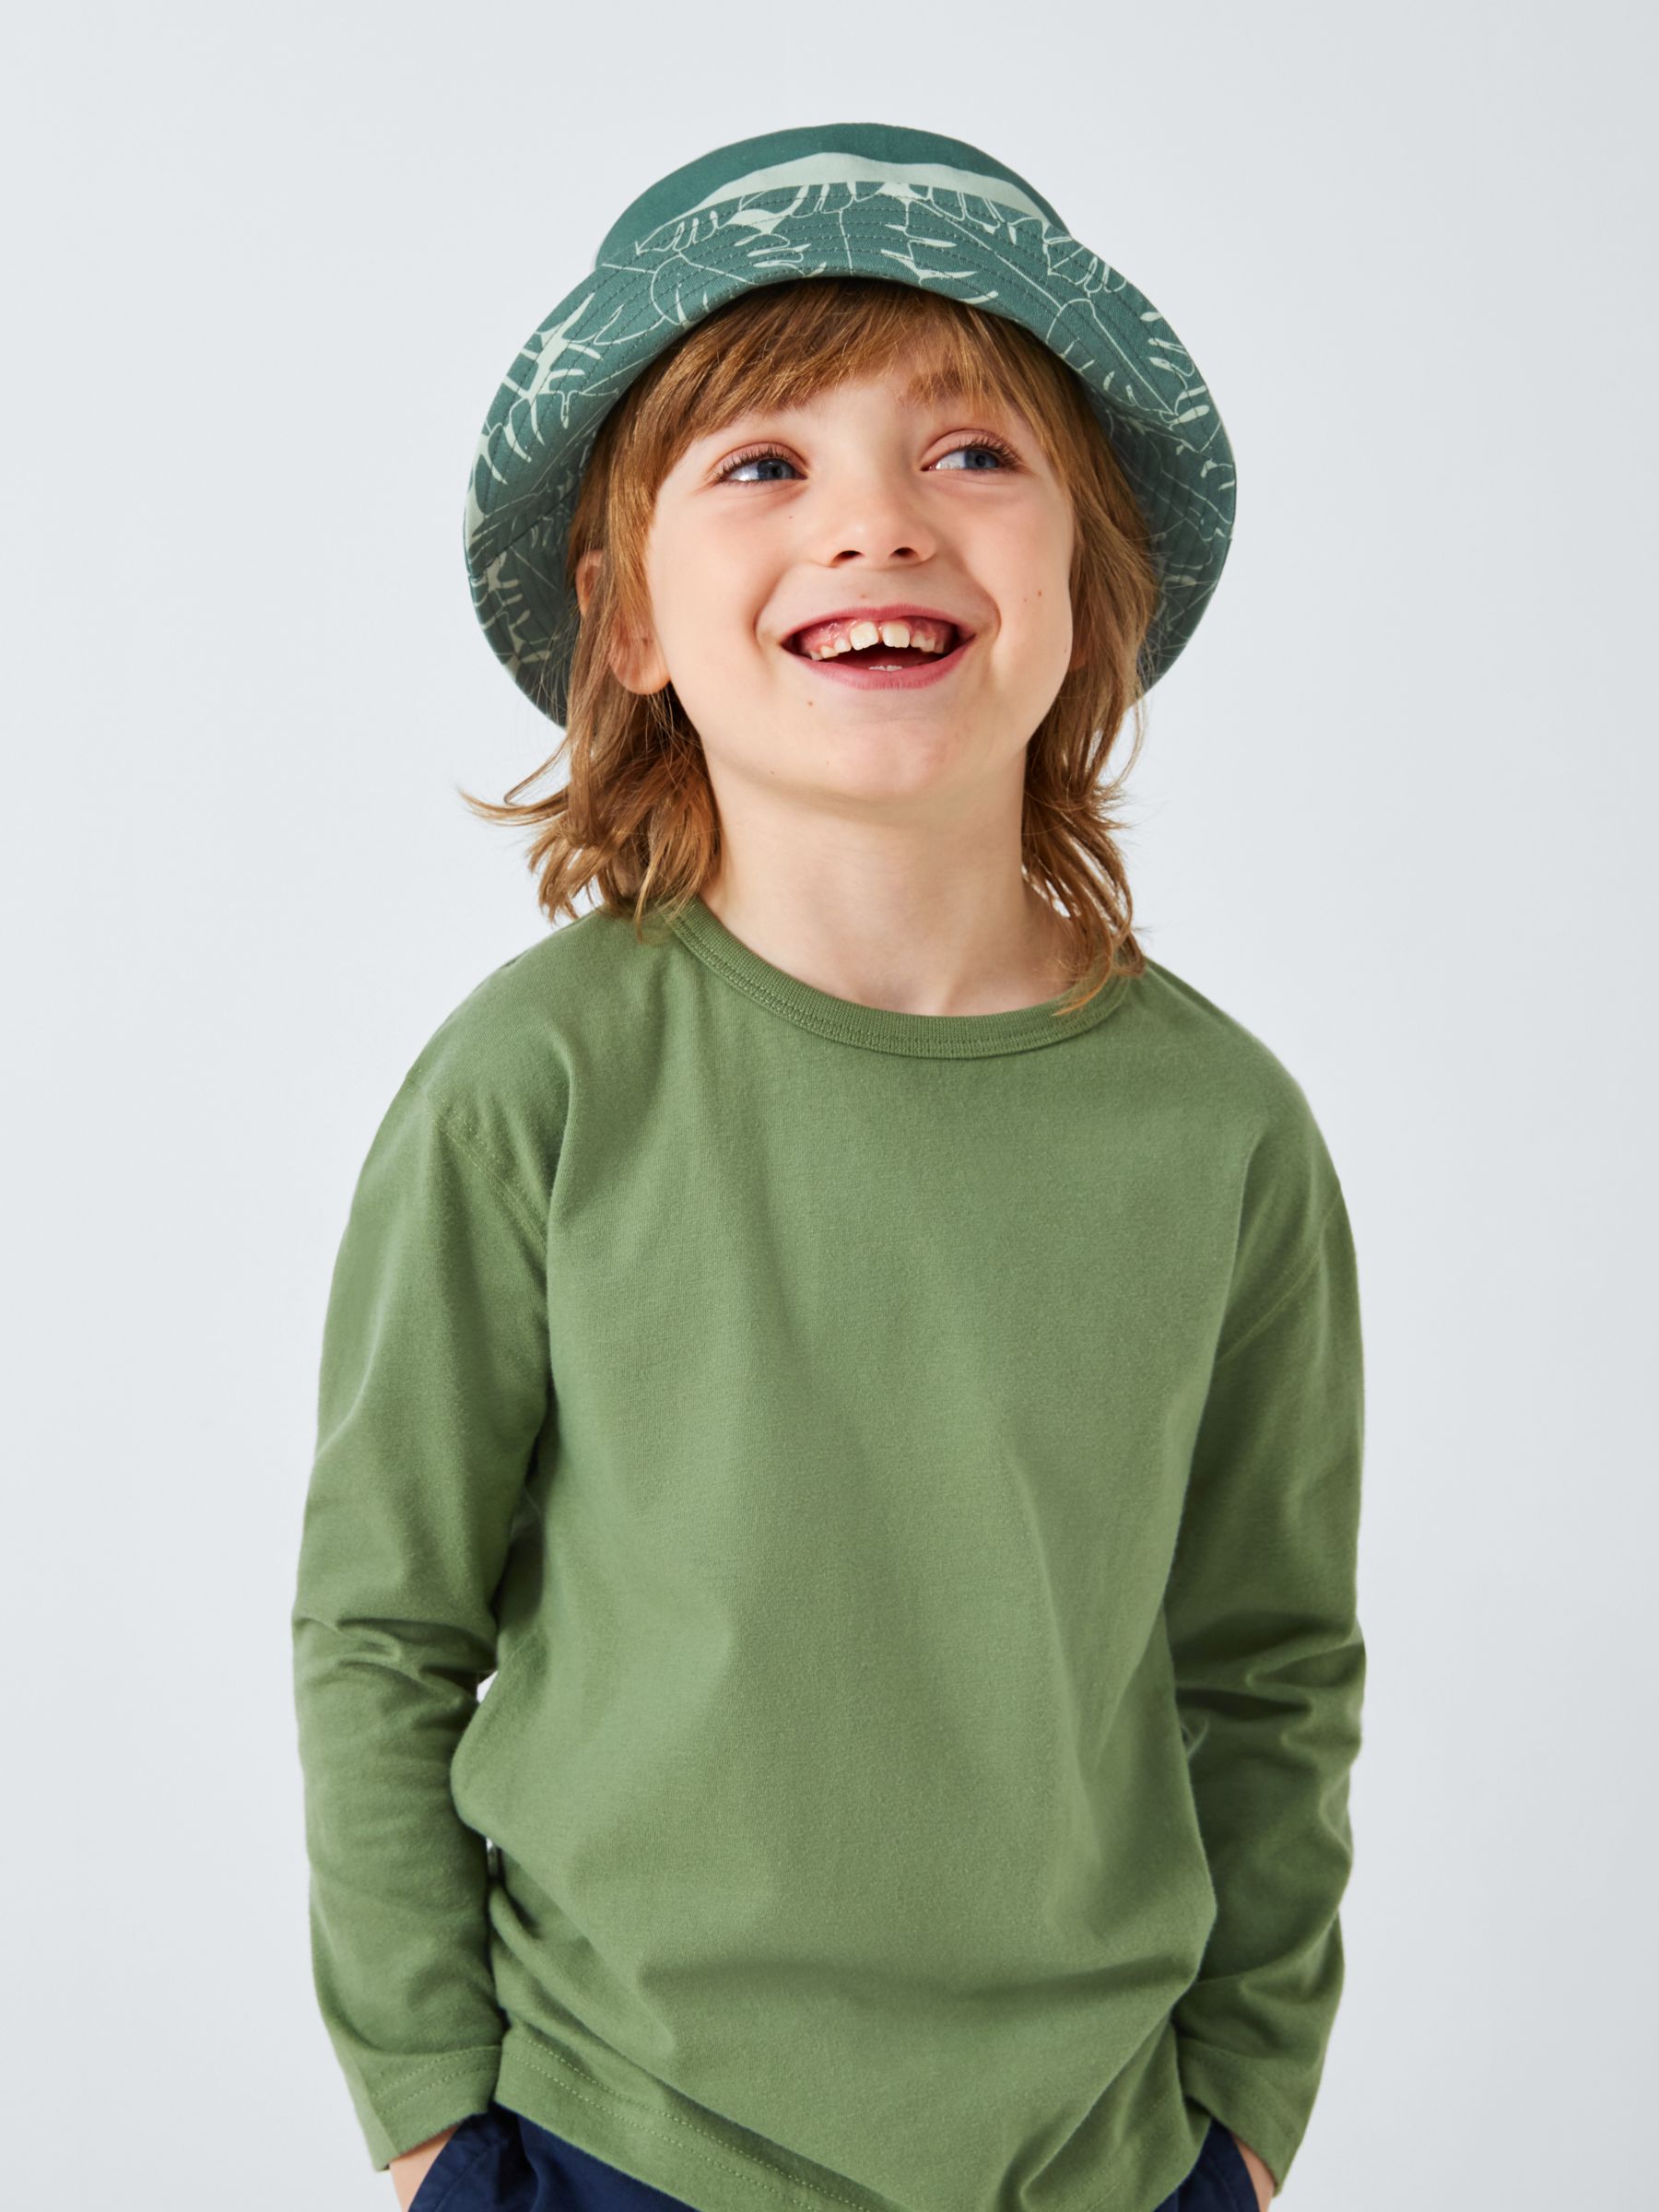 John Lewis Kids' Leaf/Stripe Reversible Bucket Hat, Green/Multi, 6-8 years